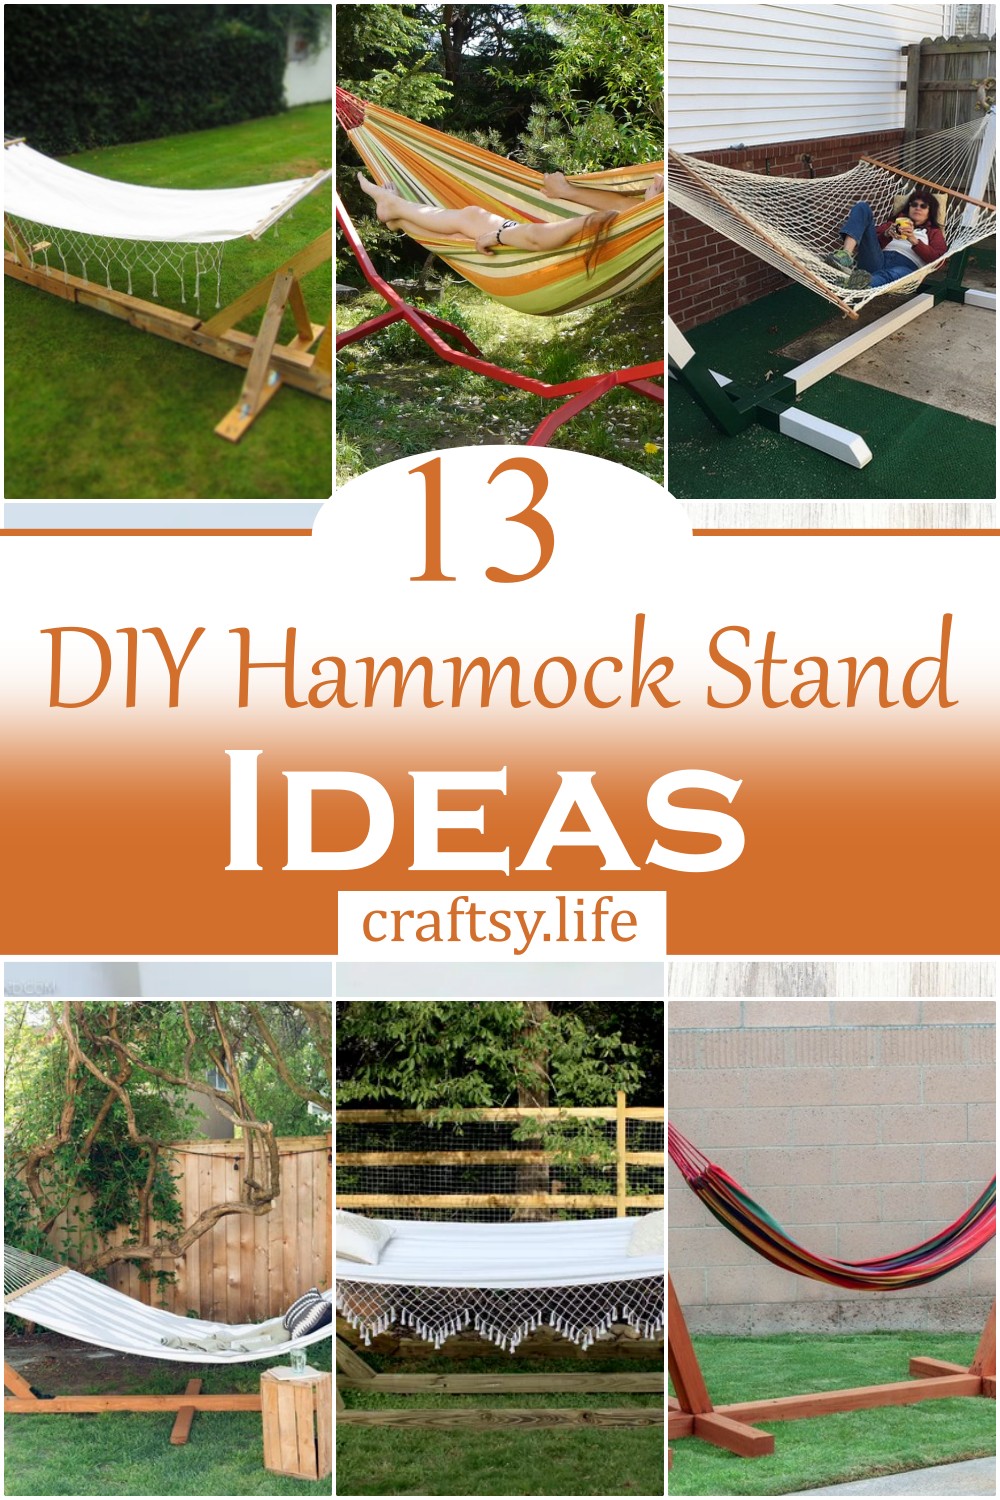 DIY Hammock Stand Ideas